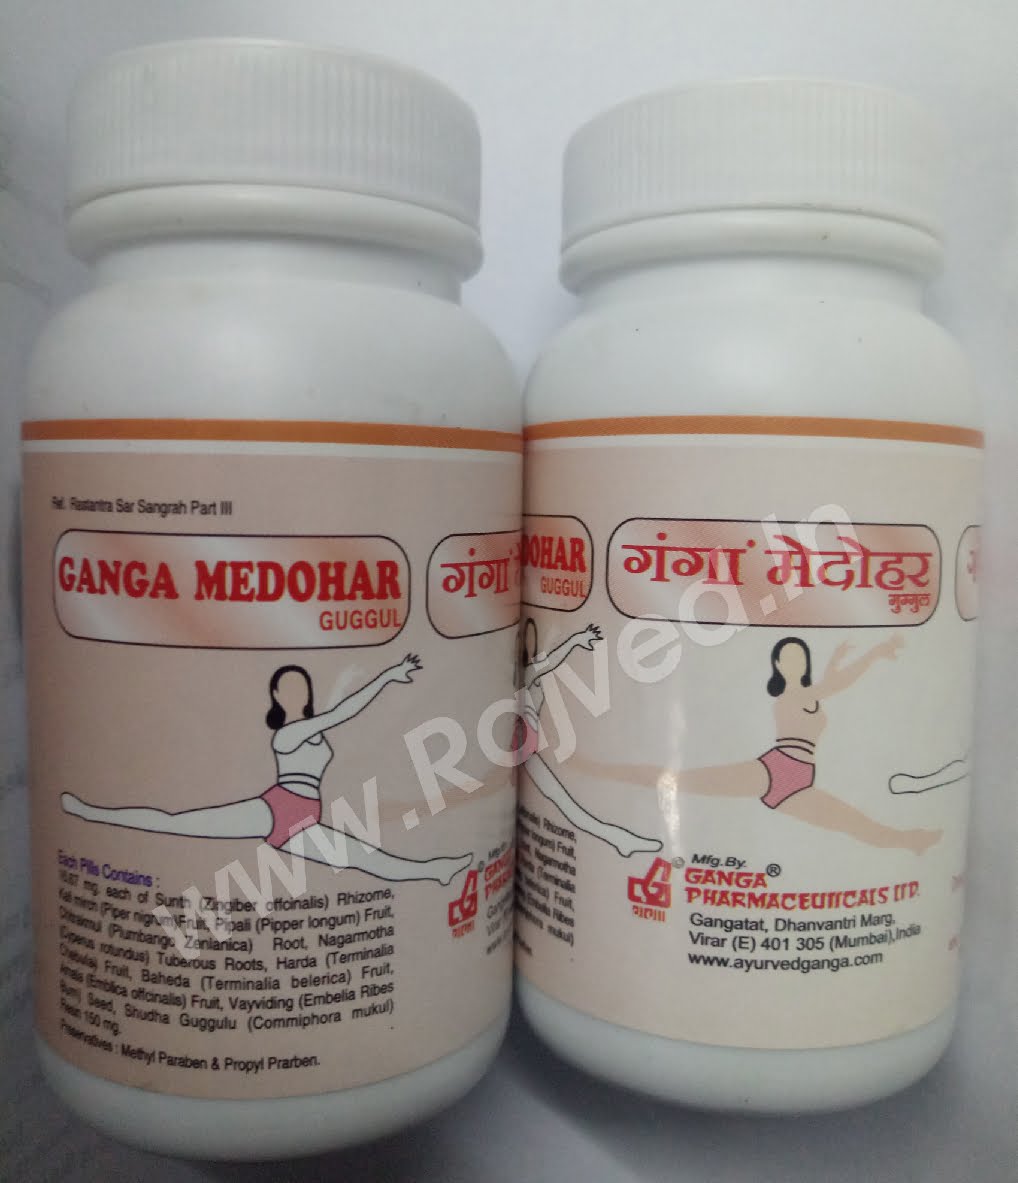 medohar guggul 200 gm upto 20% off free shipping ganga pharmaceuticals